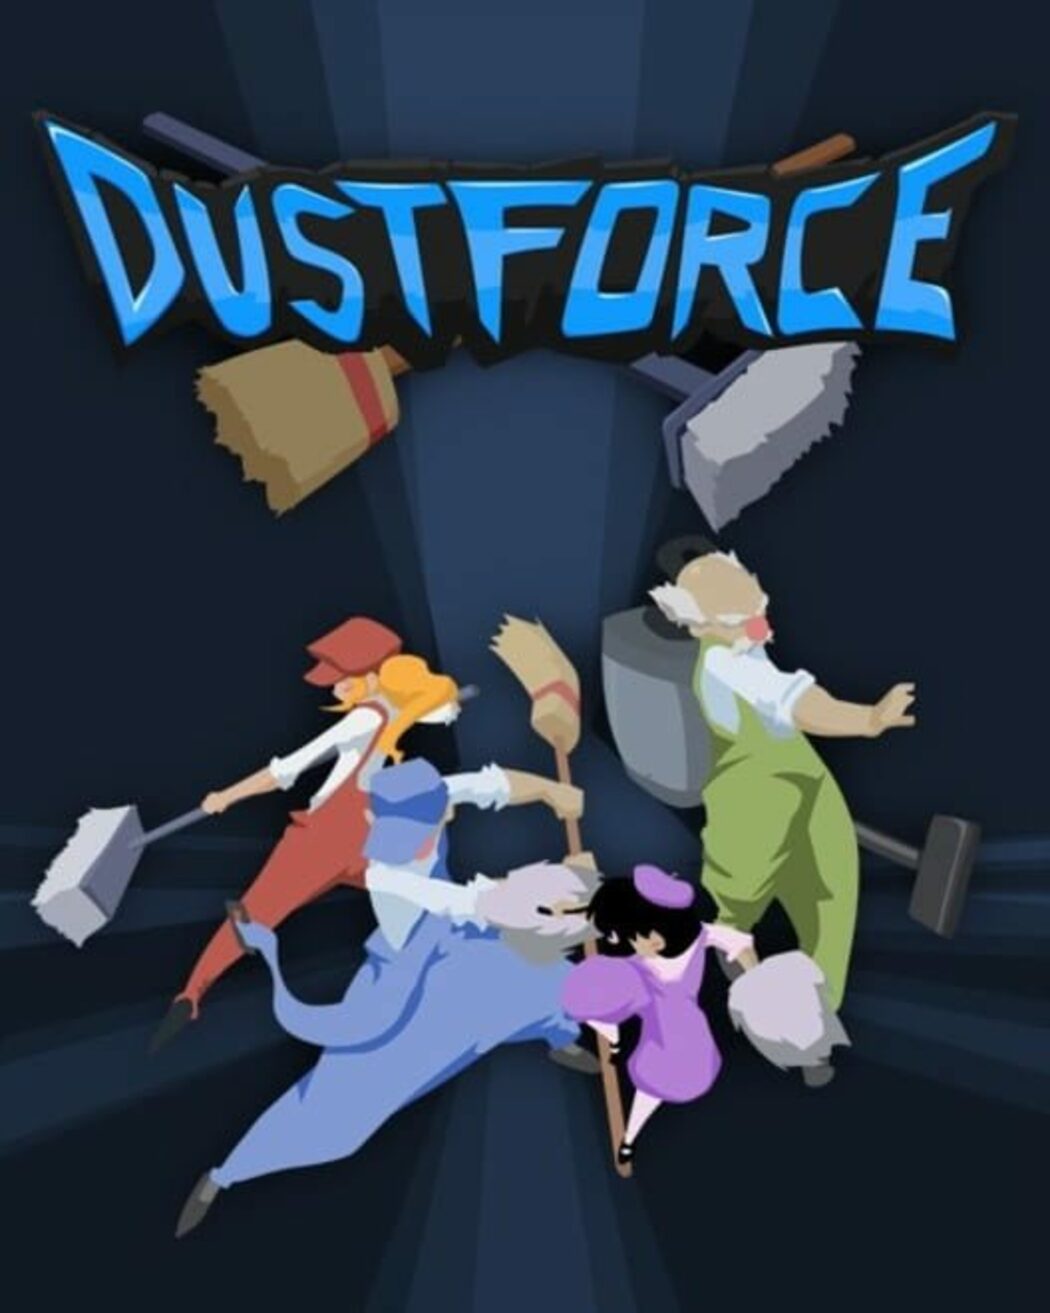 dustforce dx advertisement